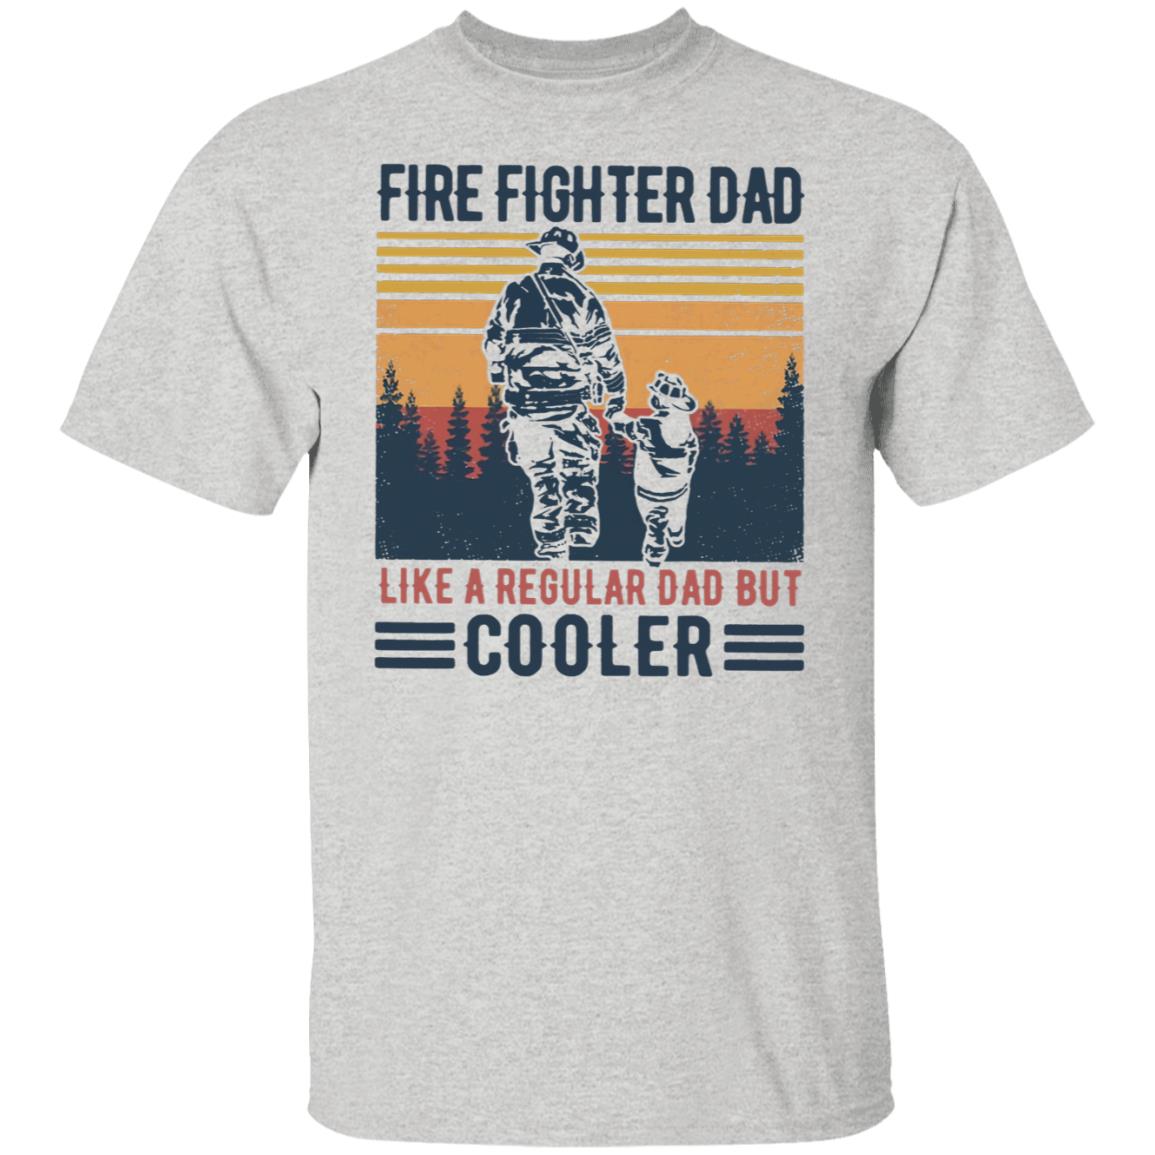 Firefighter Dad Like A Regular Dad But Cooler T-shirt for Dad